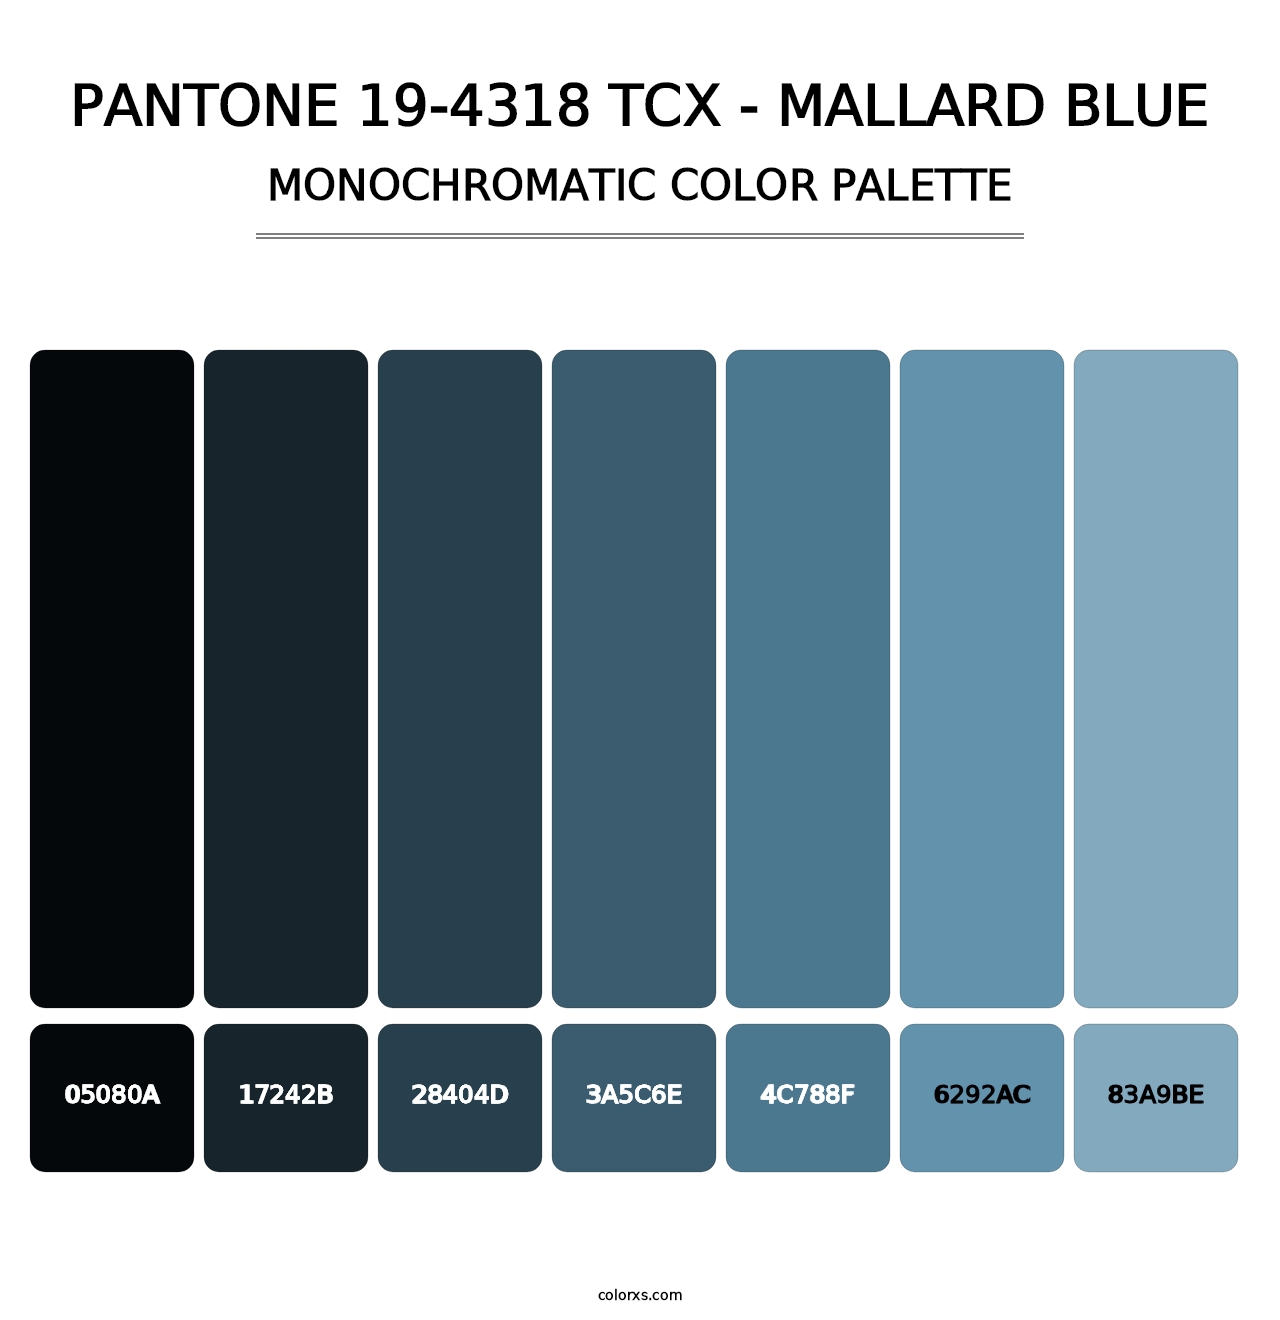 PANTONE 19-4318 TCX - Mallard Blue - Monochromatic Color Palette